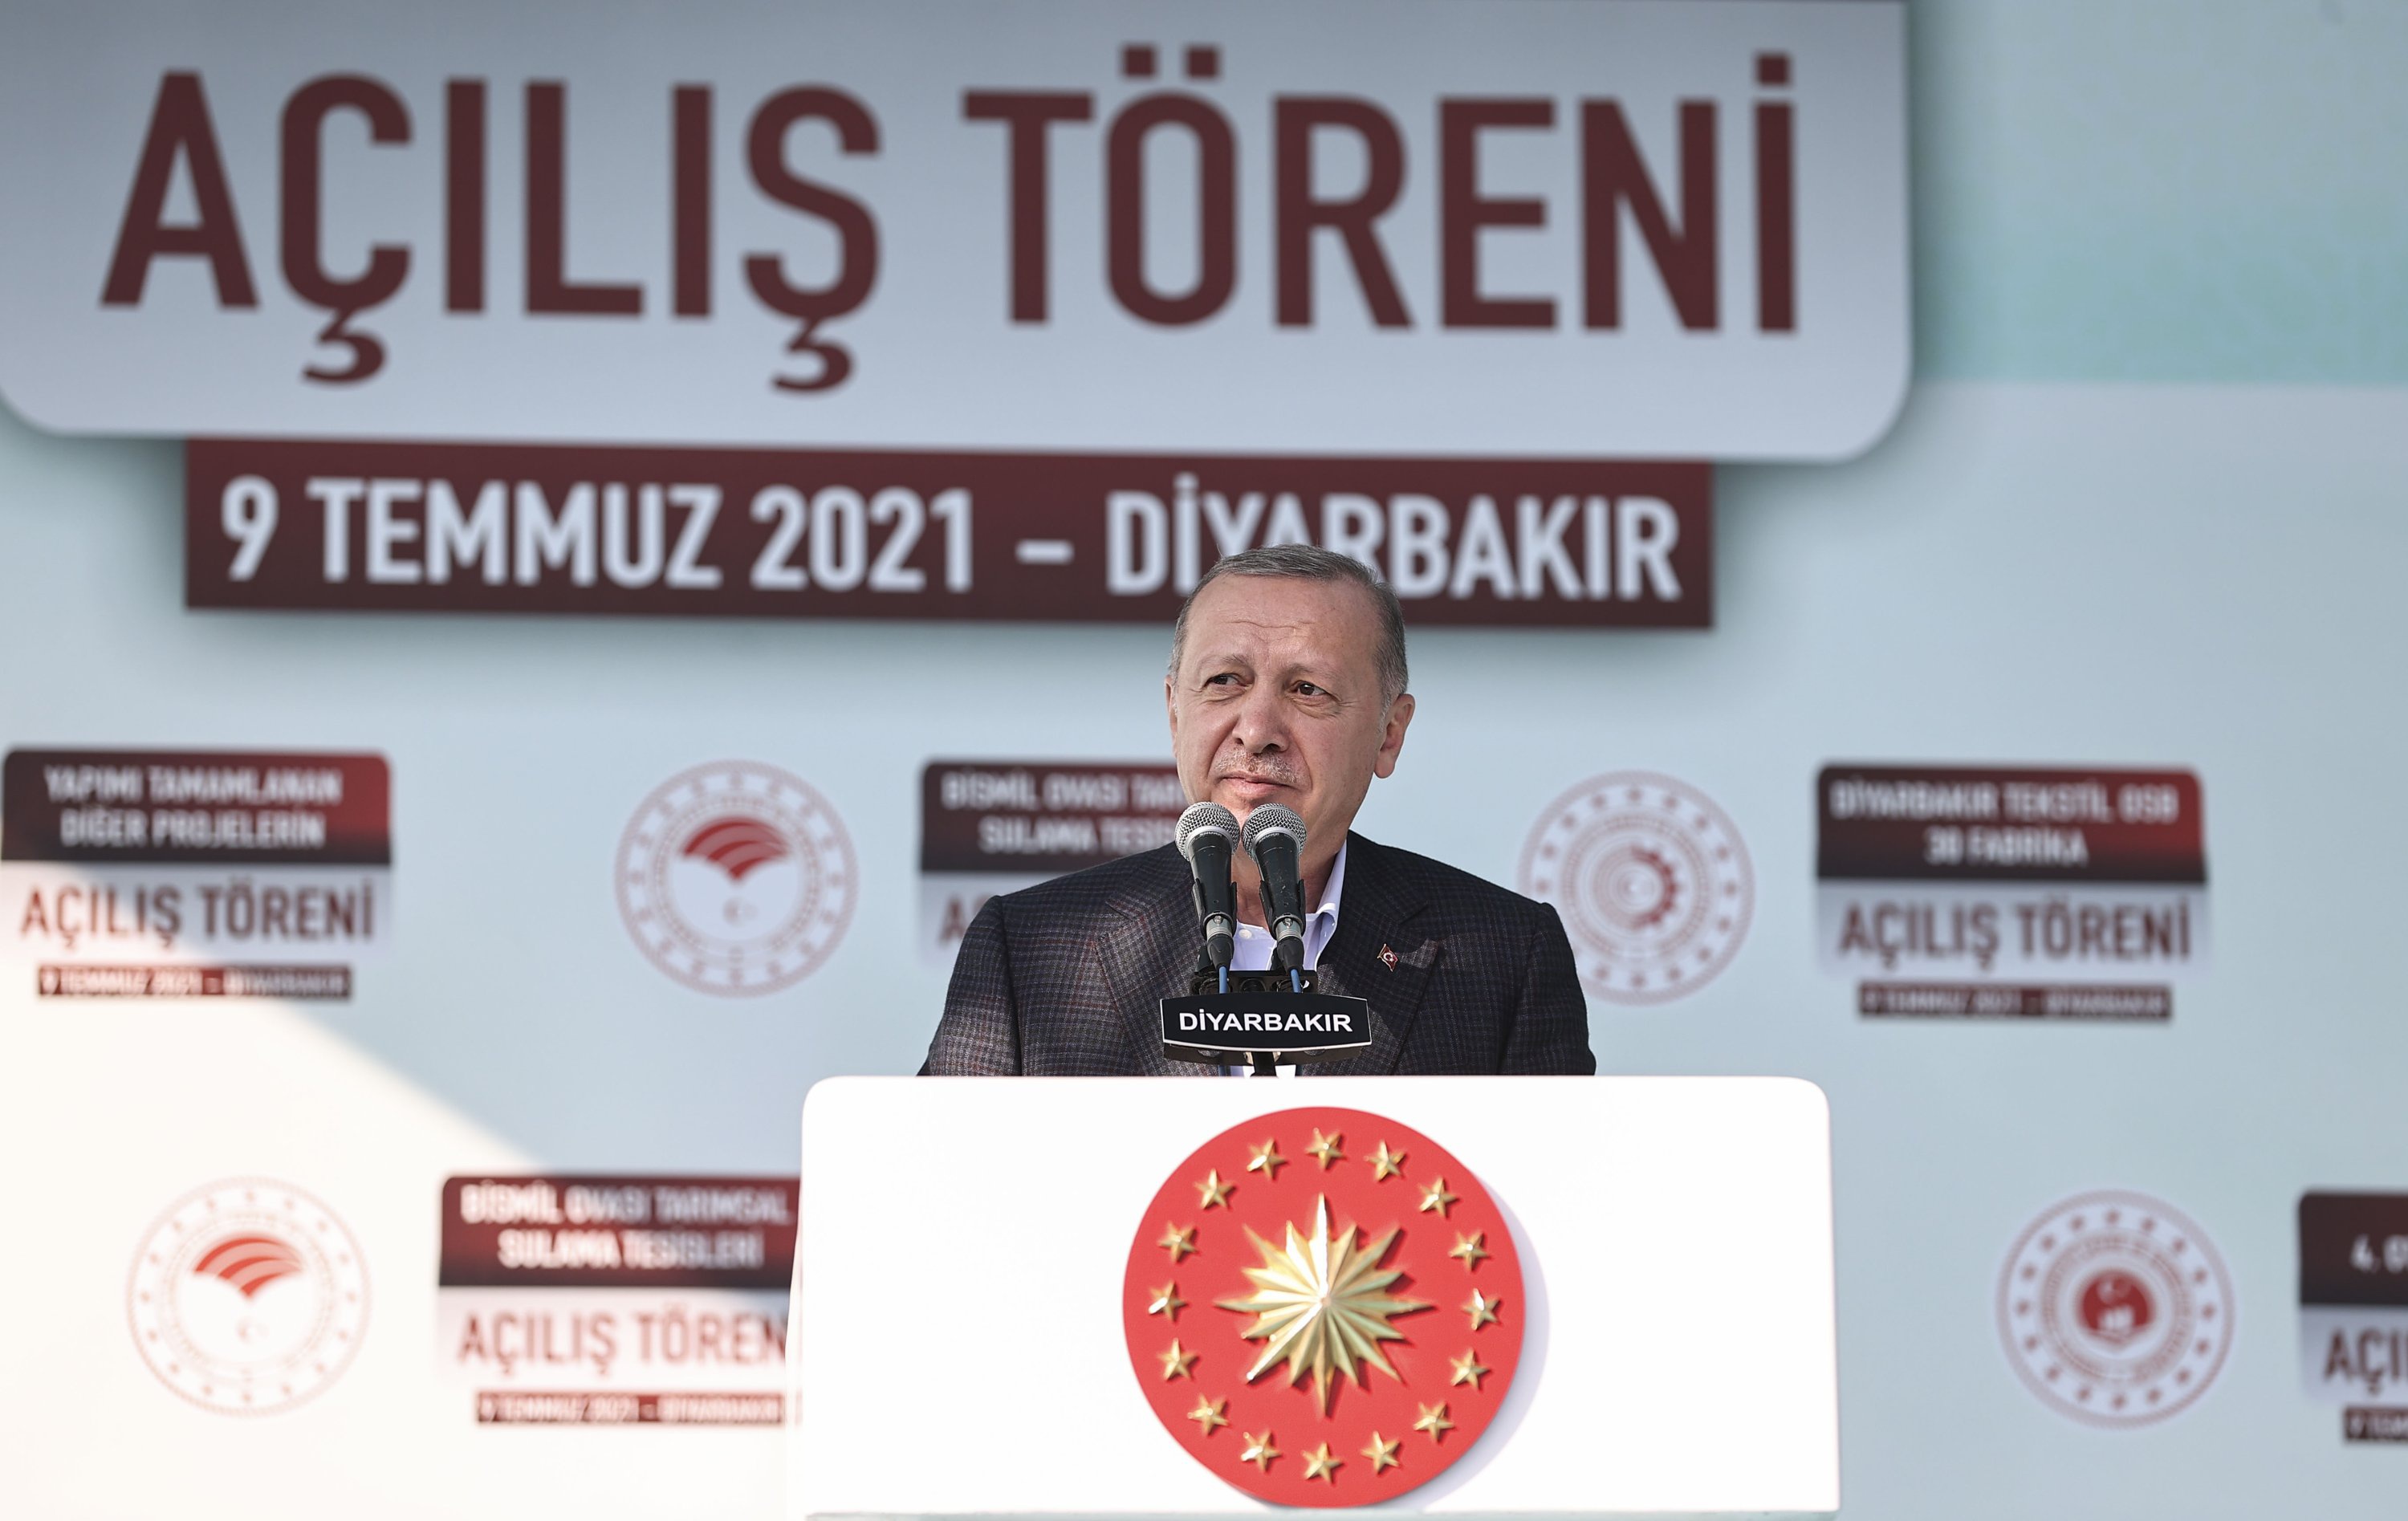 Biji serok Erdogan! / Aydin Selcen